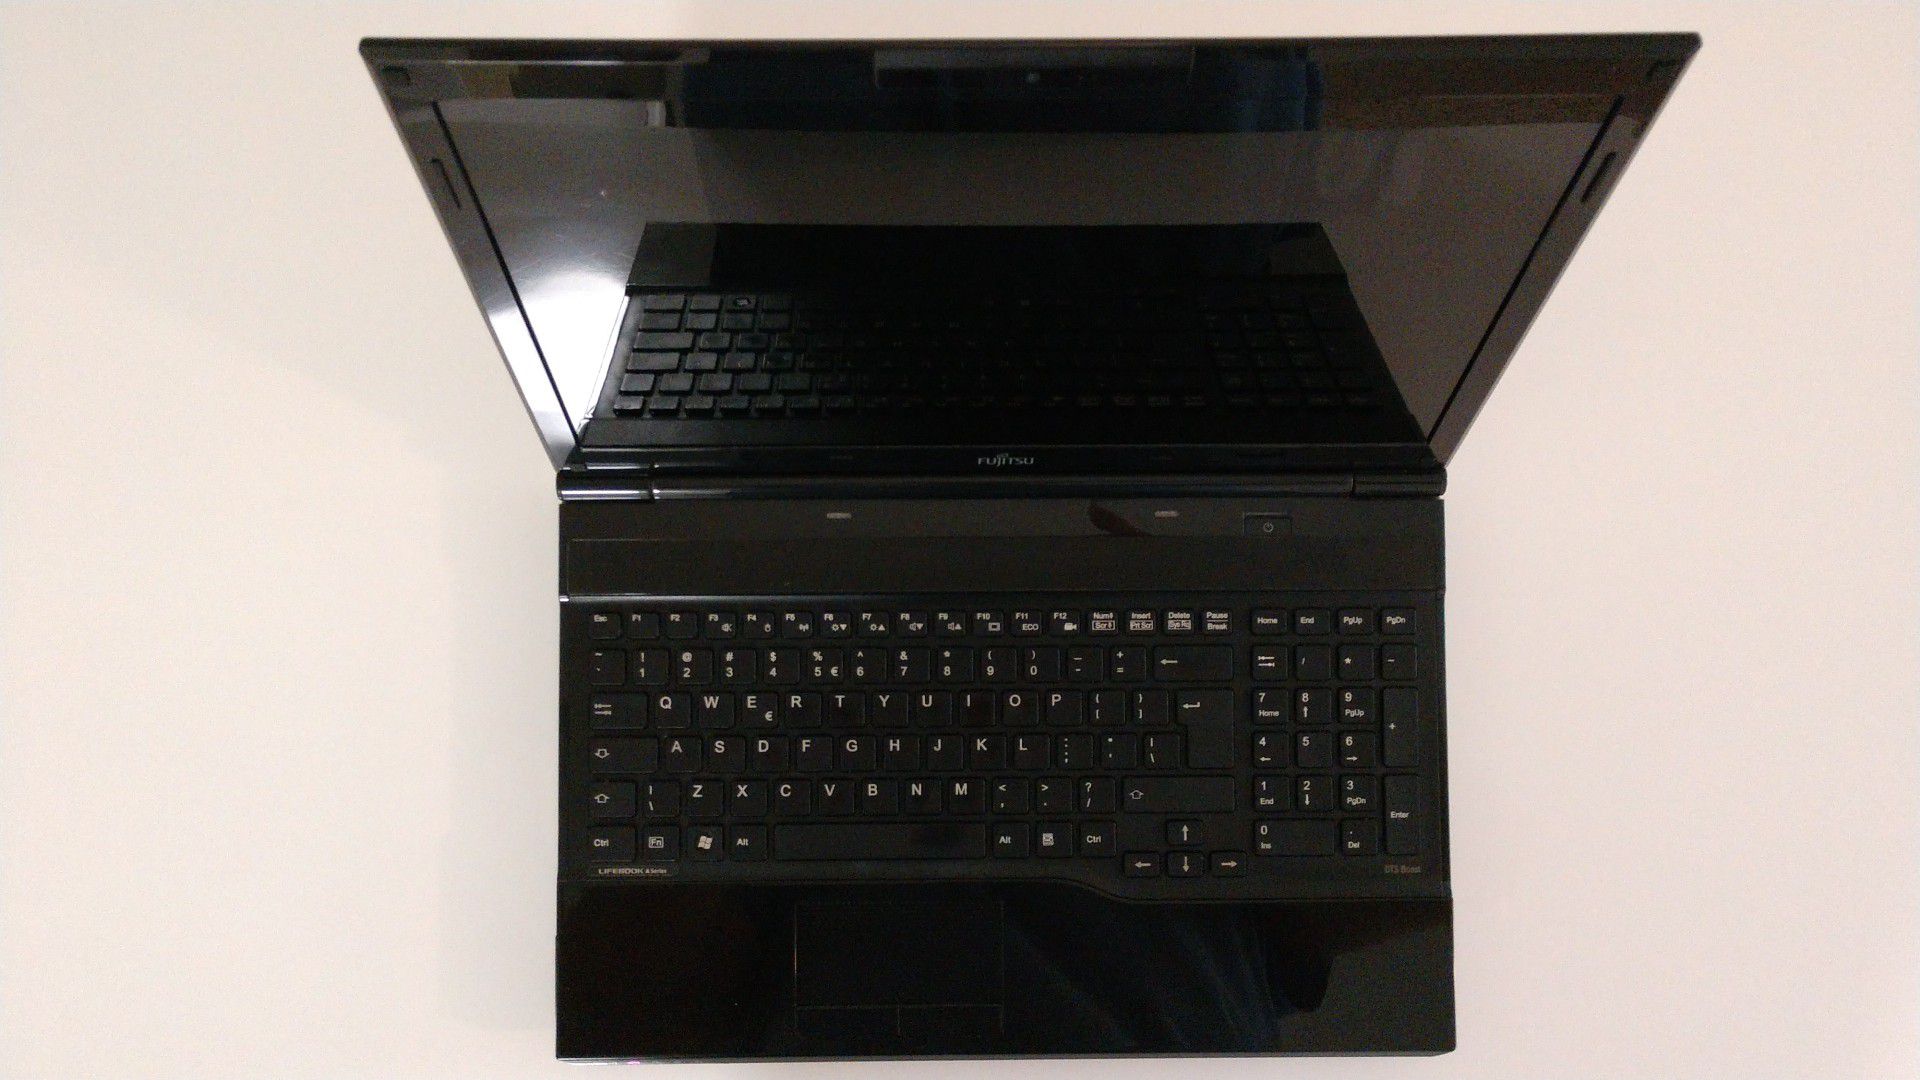 Fujitsu Lifebook AH 532 laptop, Intel i5 processor, made in Germany